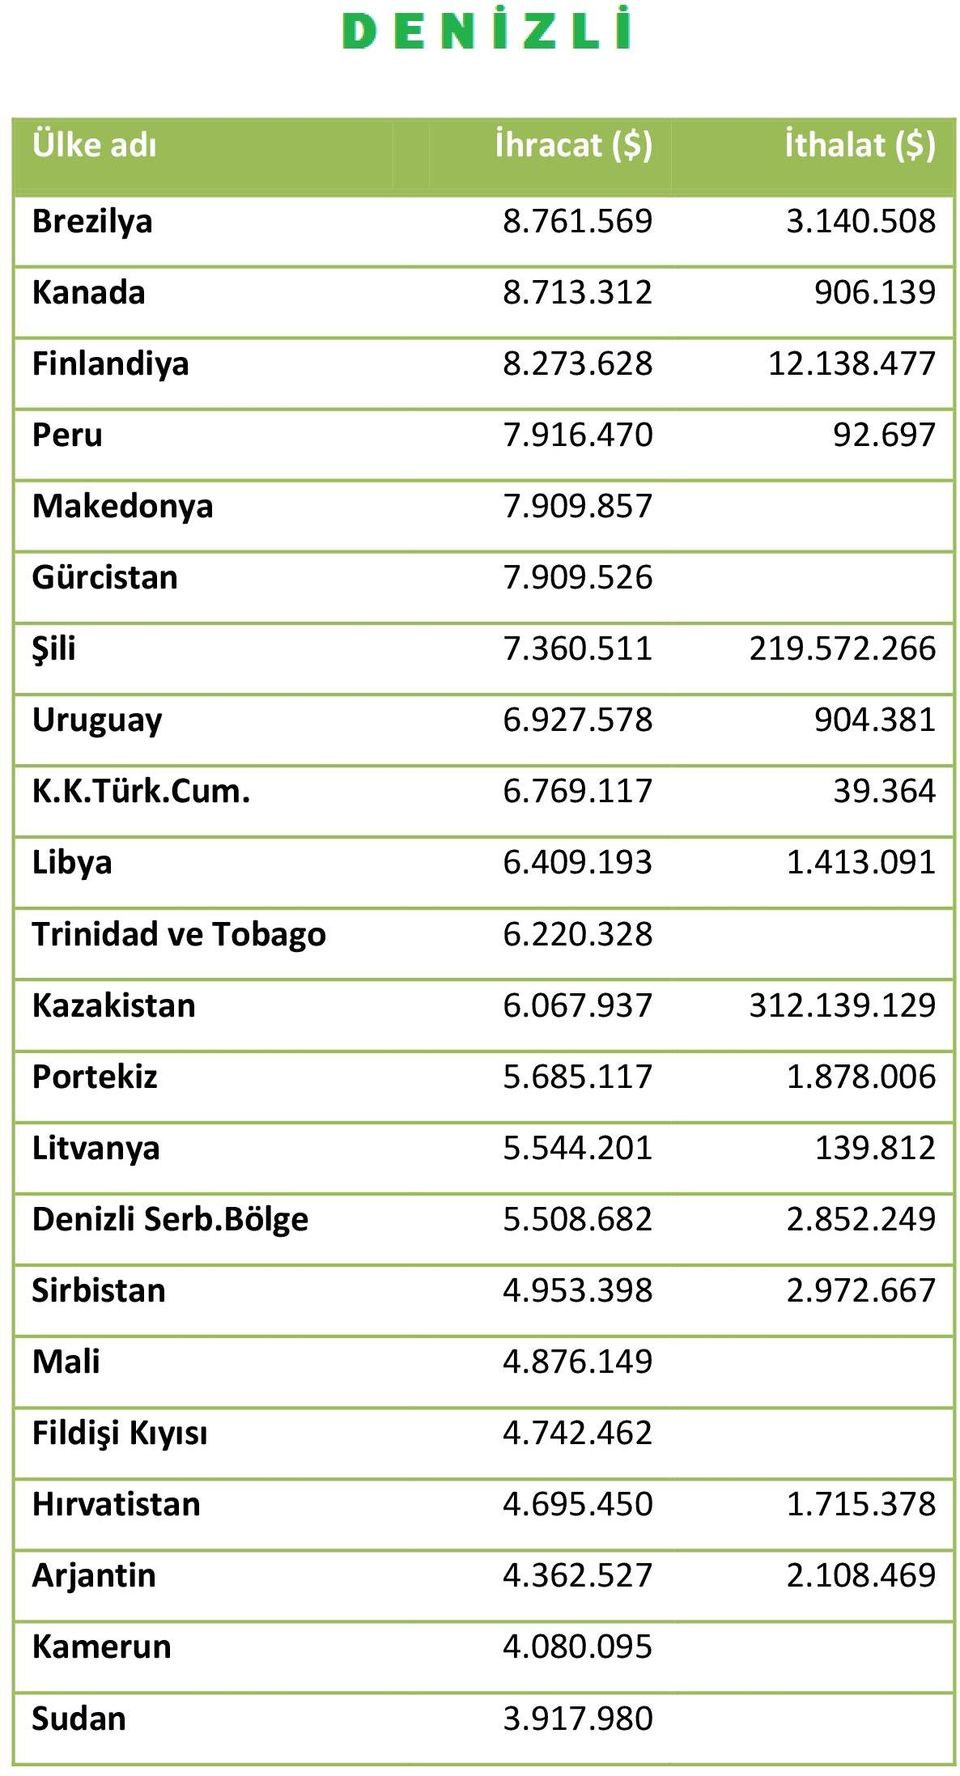 091 Trinidad ve Tobago 6.220.328 Kazakistan 6.067.937 312.139.129 Portekiz 5.685.117 1.878.006 Litvanya 5.544.201 139.812 Denizli Serb.Bölge 5.508.682 2.